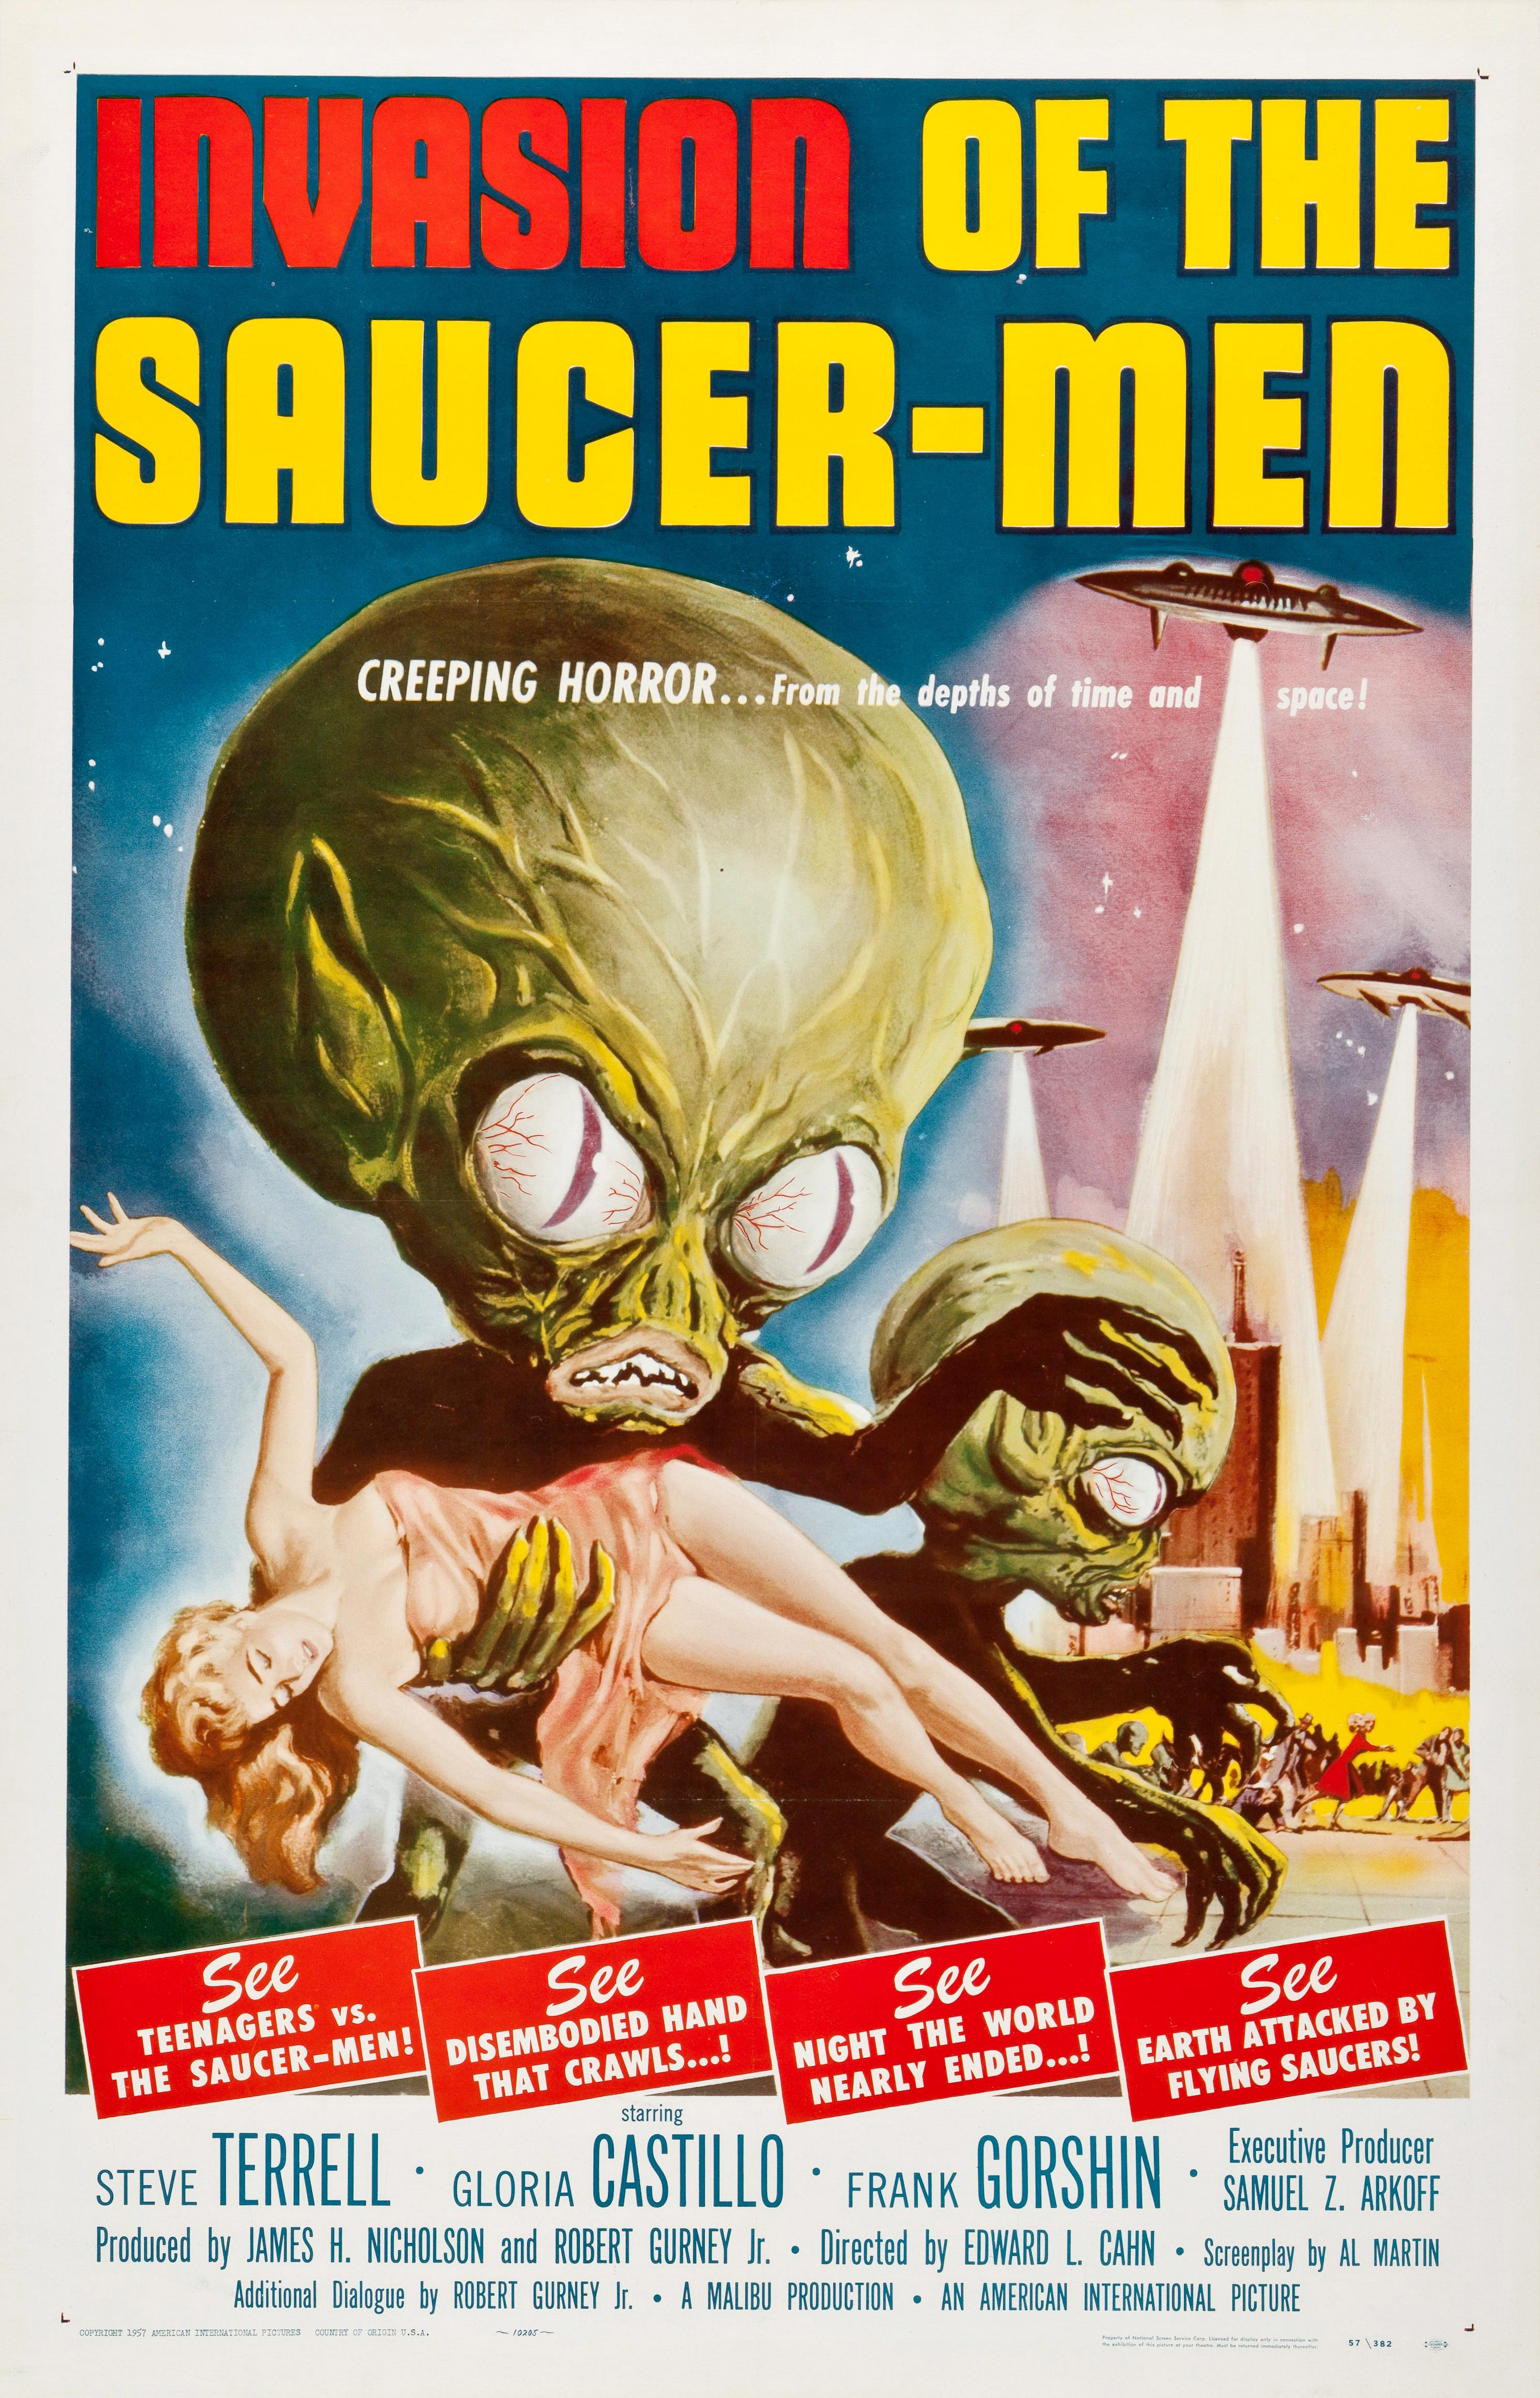 Sinema Sanattır: Muhteşem Afişlere Sahip 20 Film 19 – 1957 invasion of the saucer men